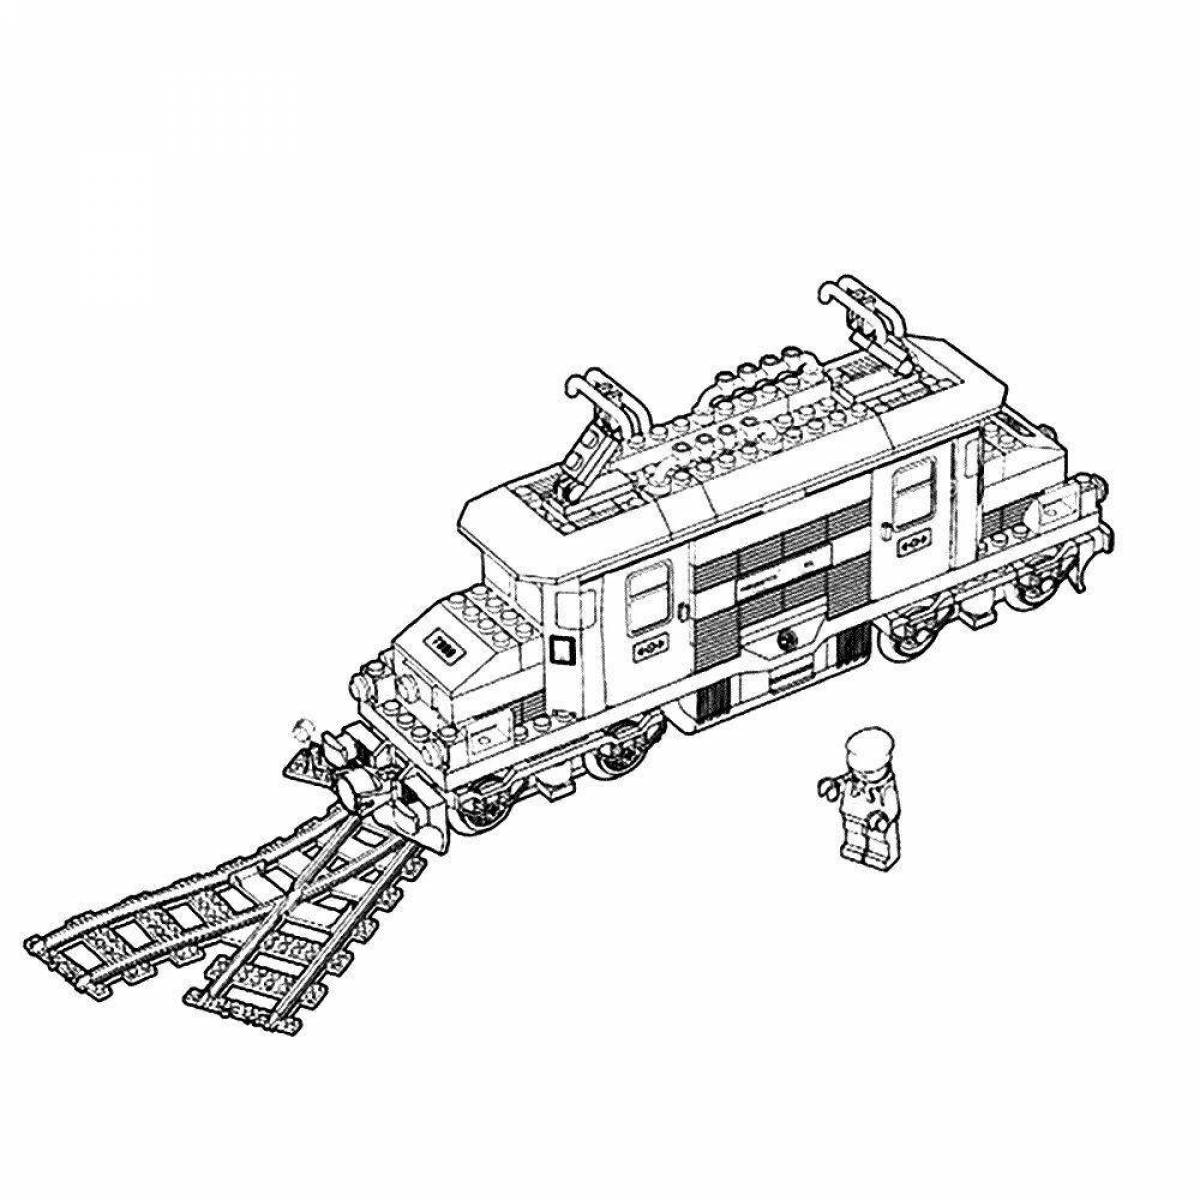 Playful snowplow train